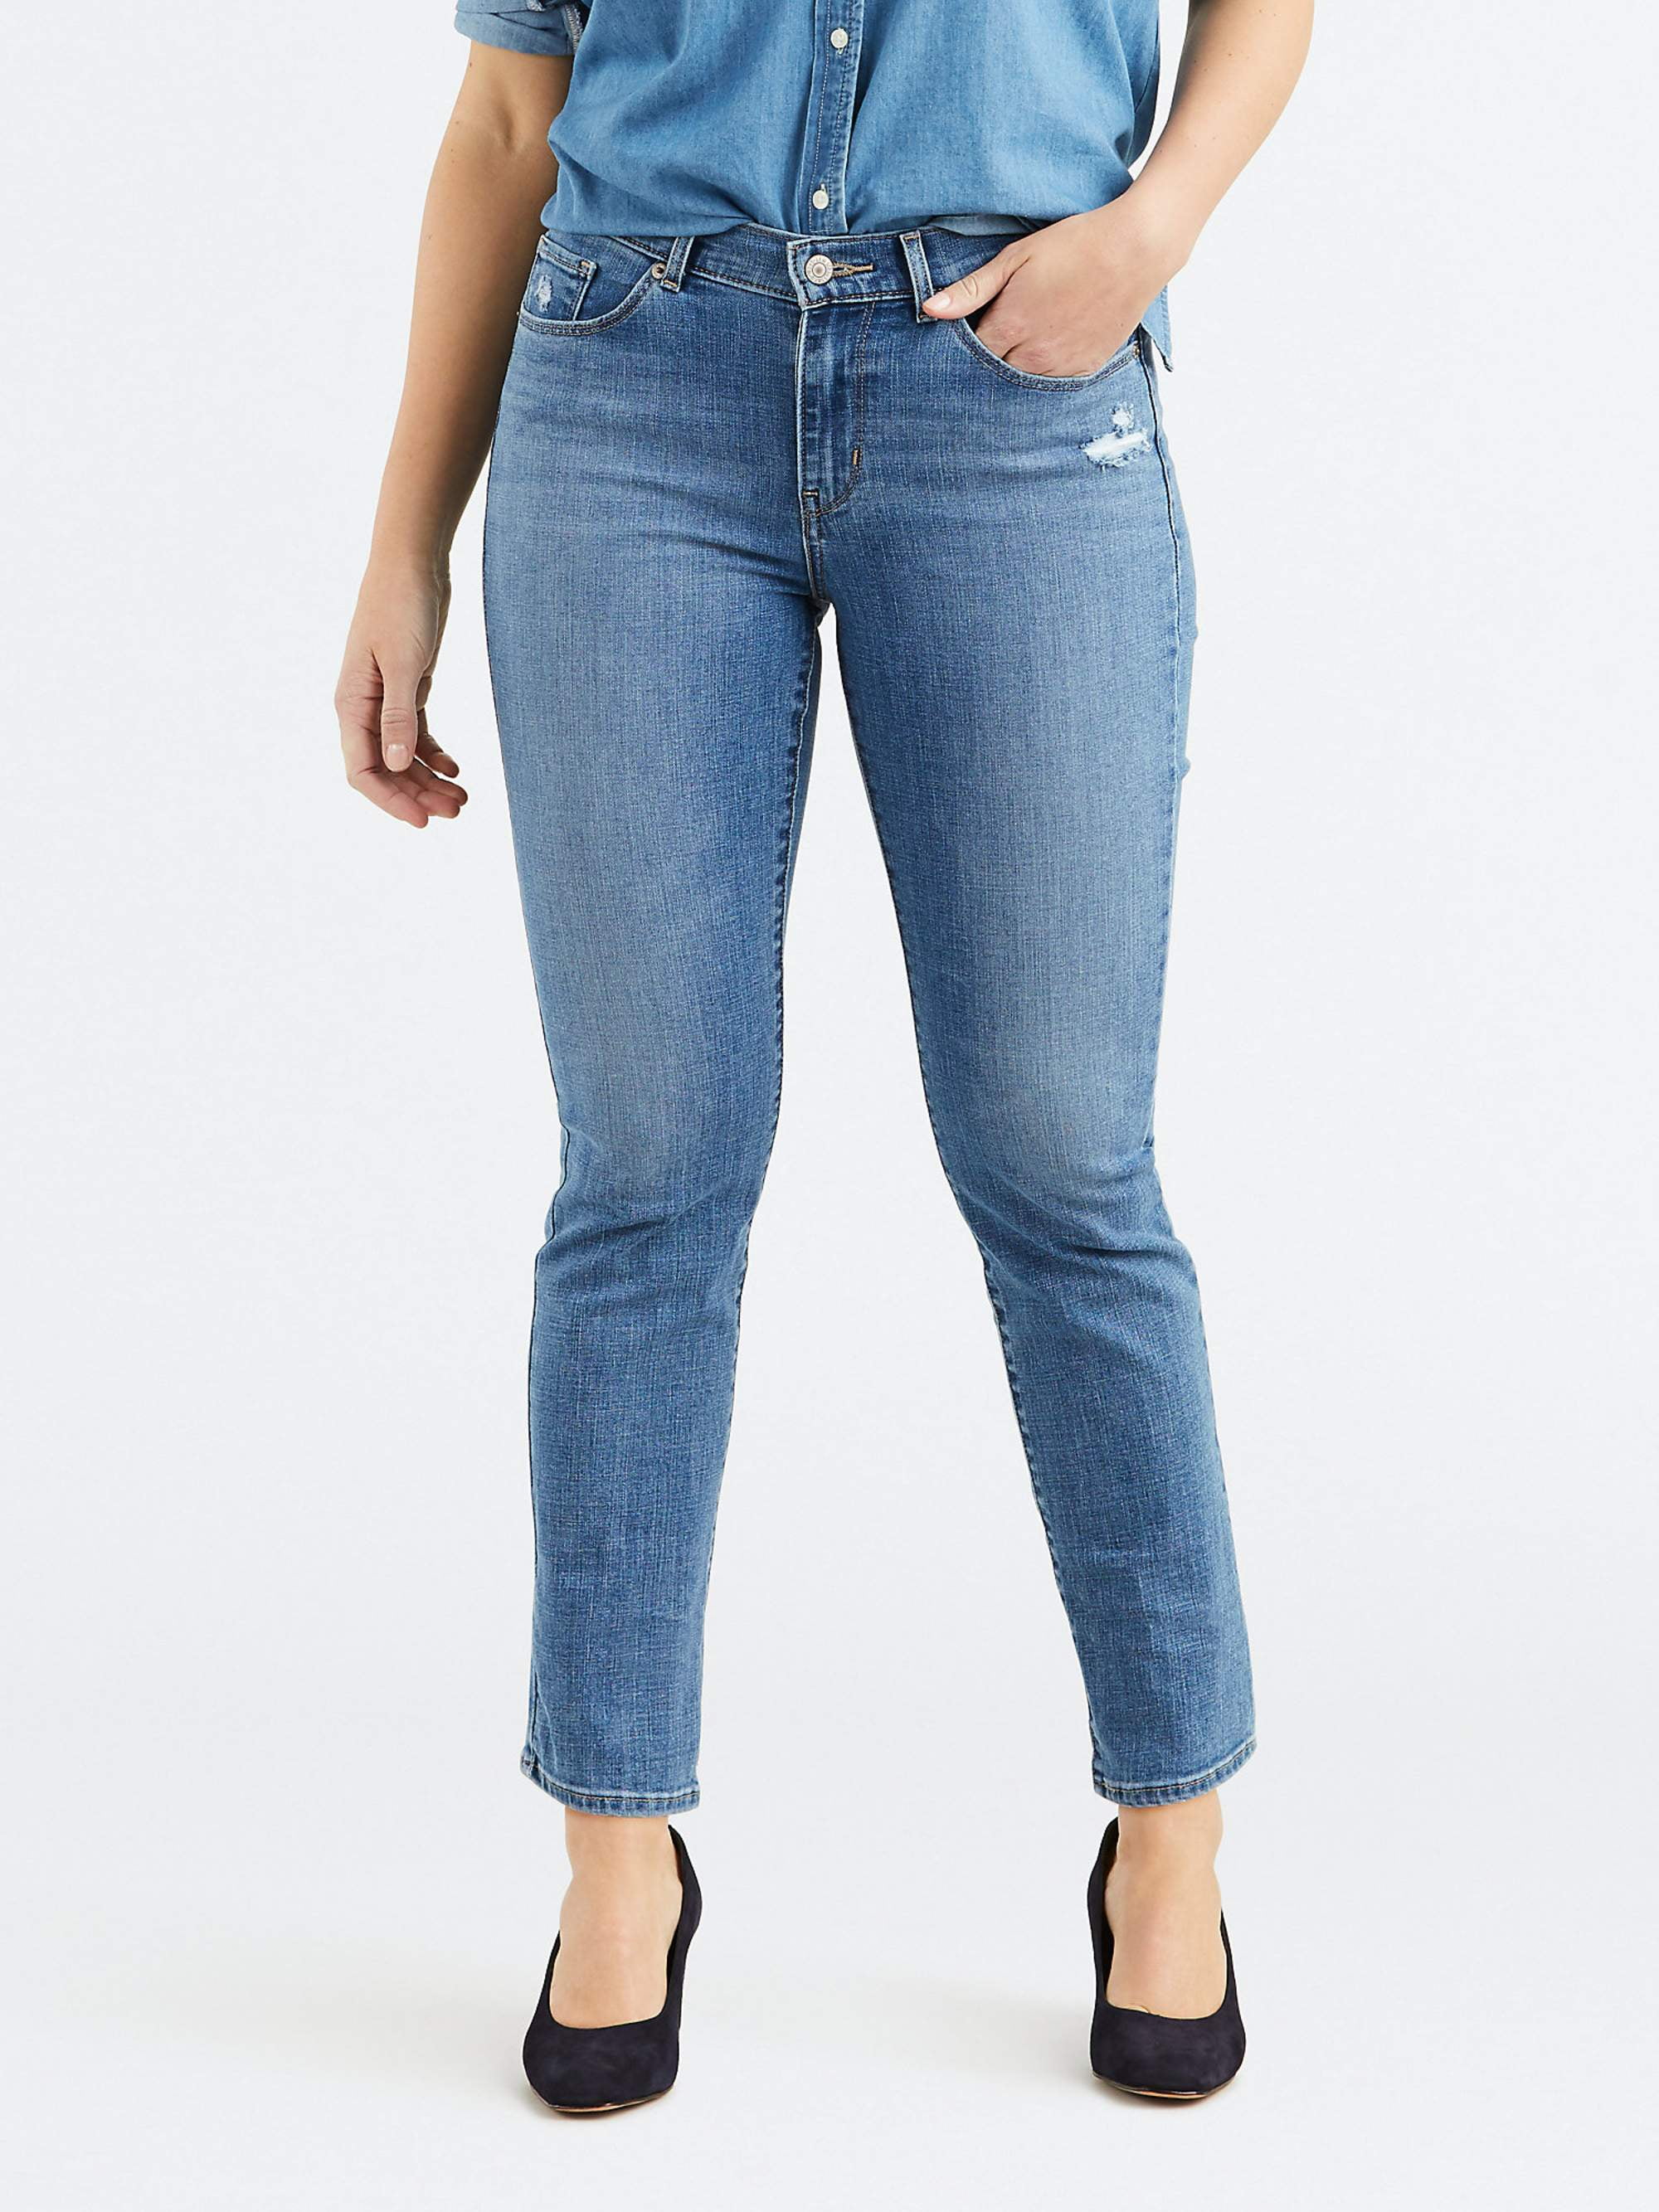 Levi's - Levi's Women's Classic Straight Jeans - Walmart.com